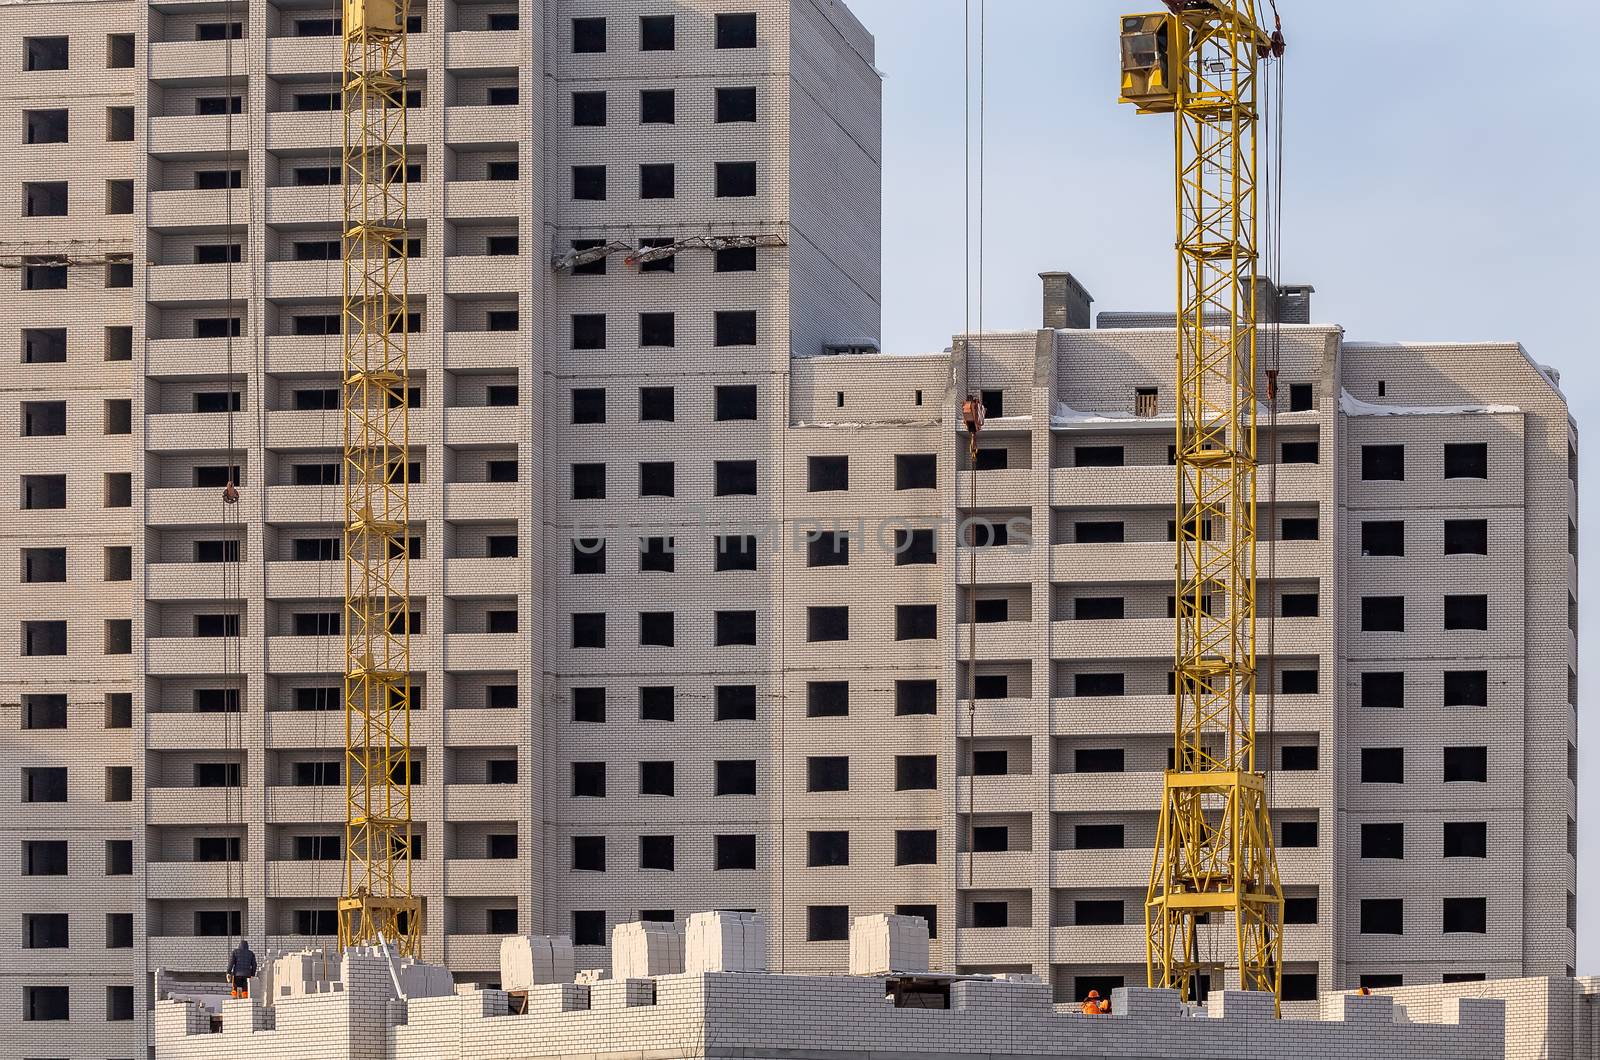 Construction site. Unfinished apartment buildings, workers, cranes by DamantisZ